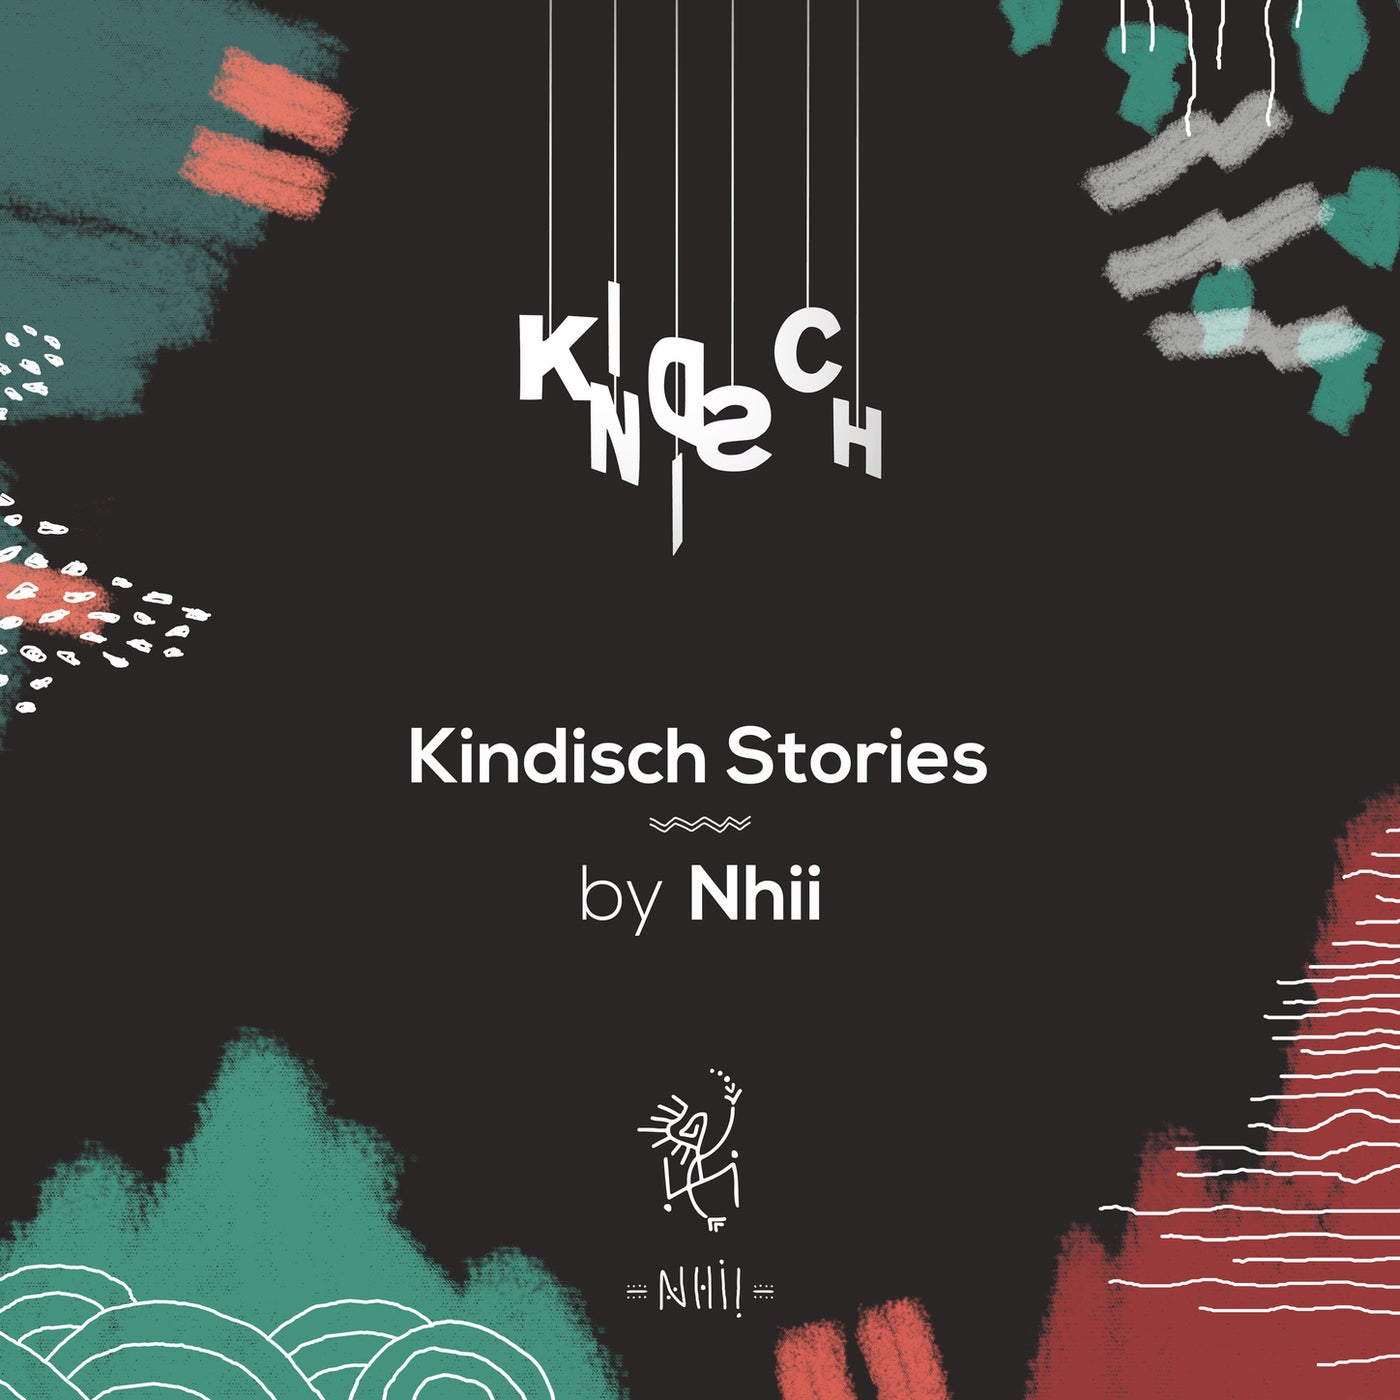 VA - Kindisch Stories by Nhii [KDDA035]